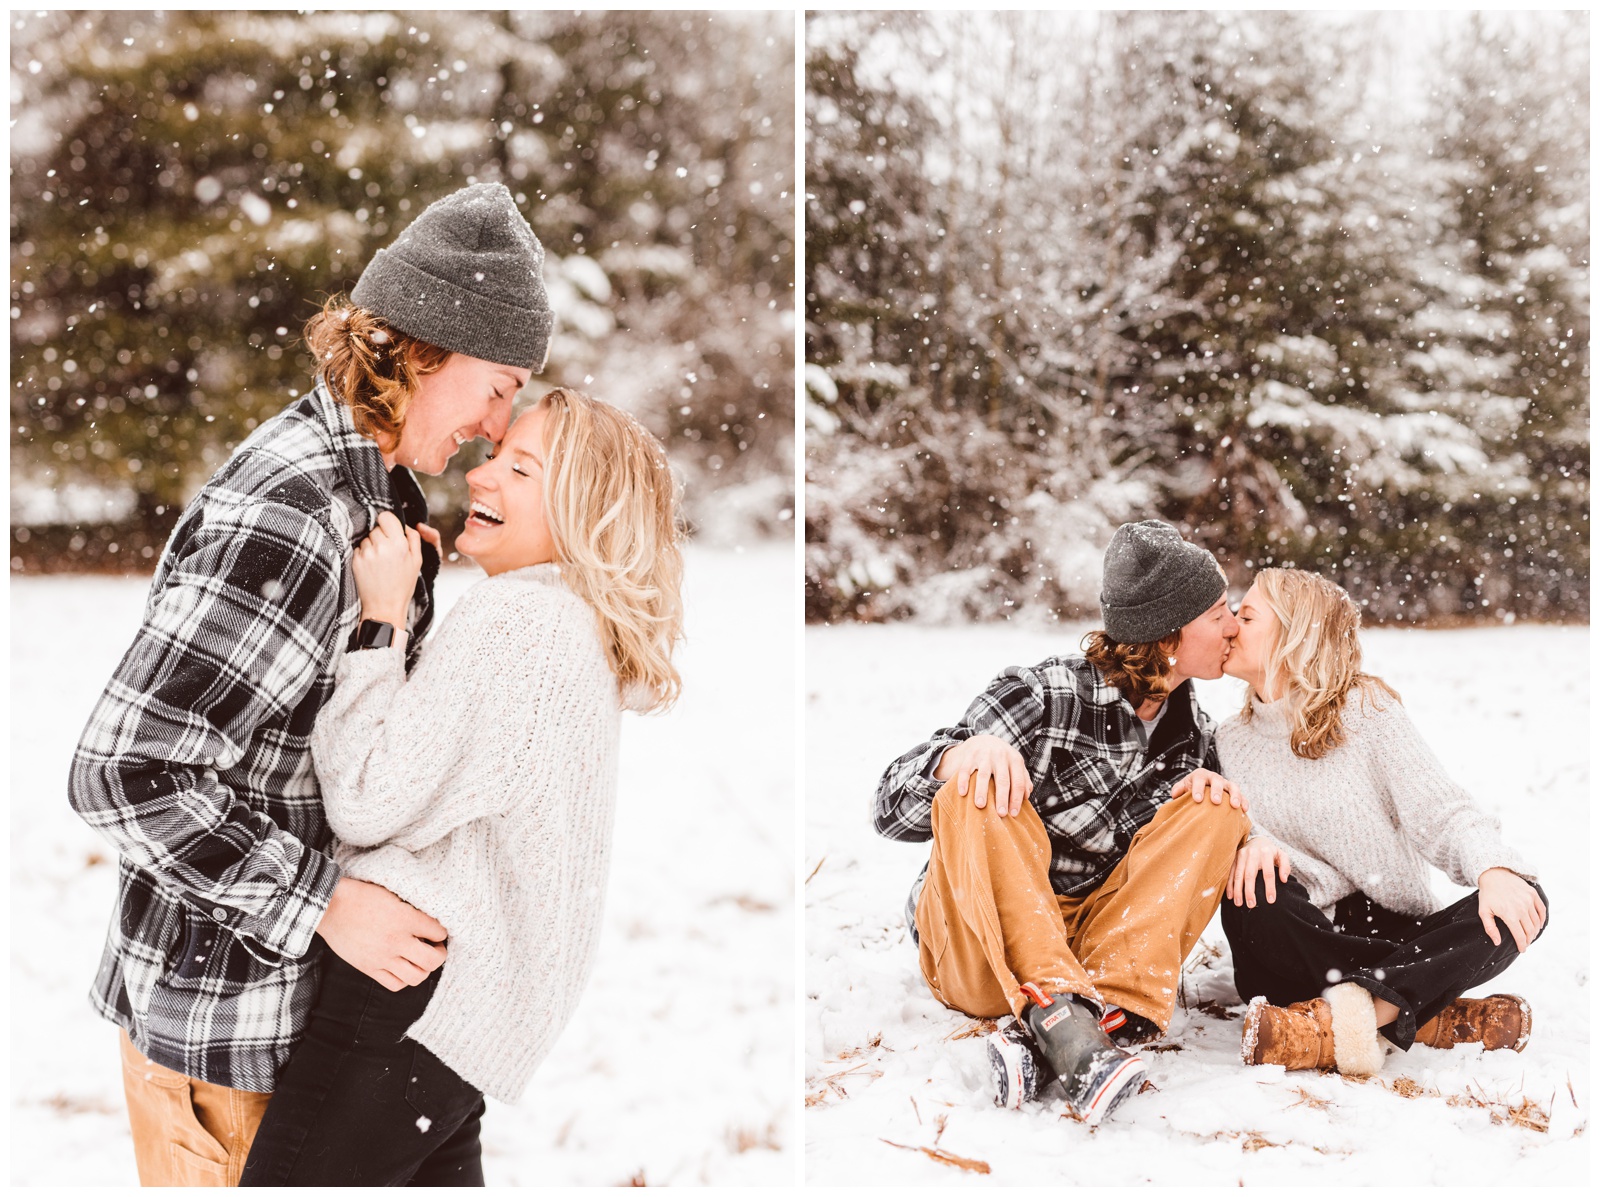 Romantic & Playful Snowy Day Engagement Session - Vermont Portrait Photographer - Brooke Michelle Photo